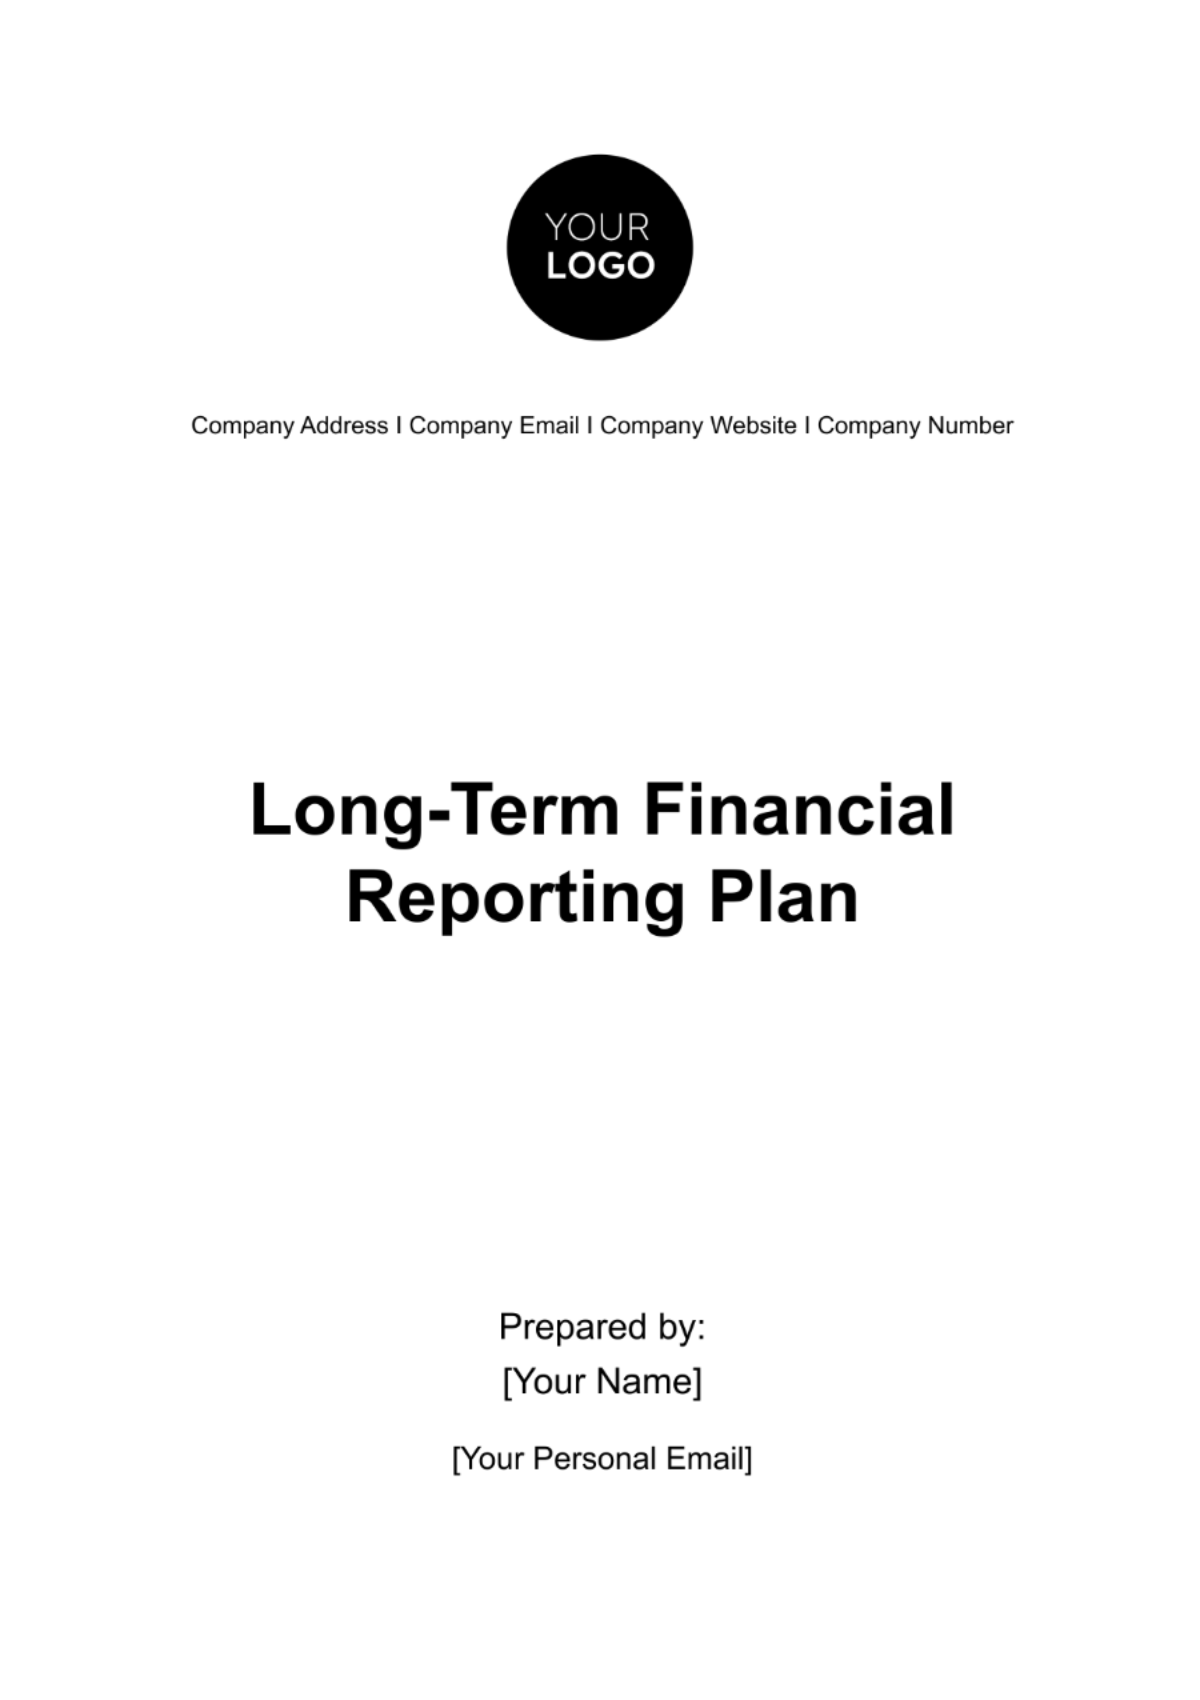 Long-Term Financial Reporting Plan Template